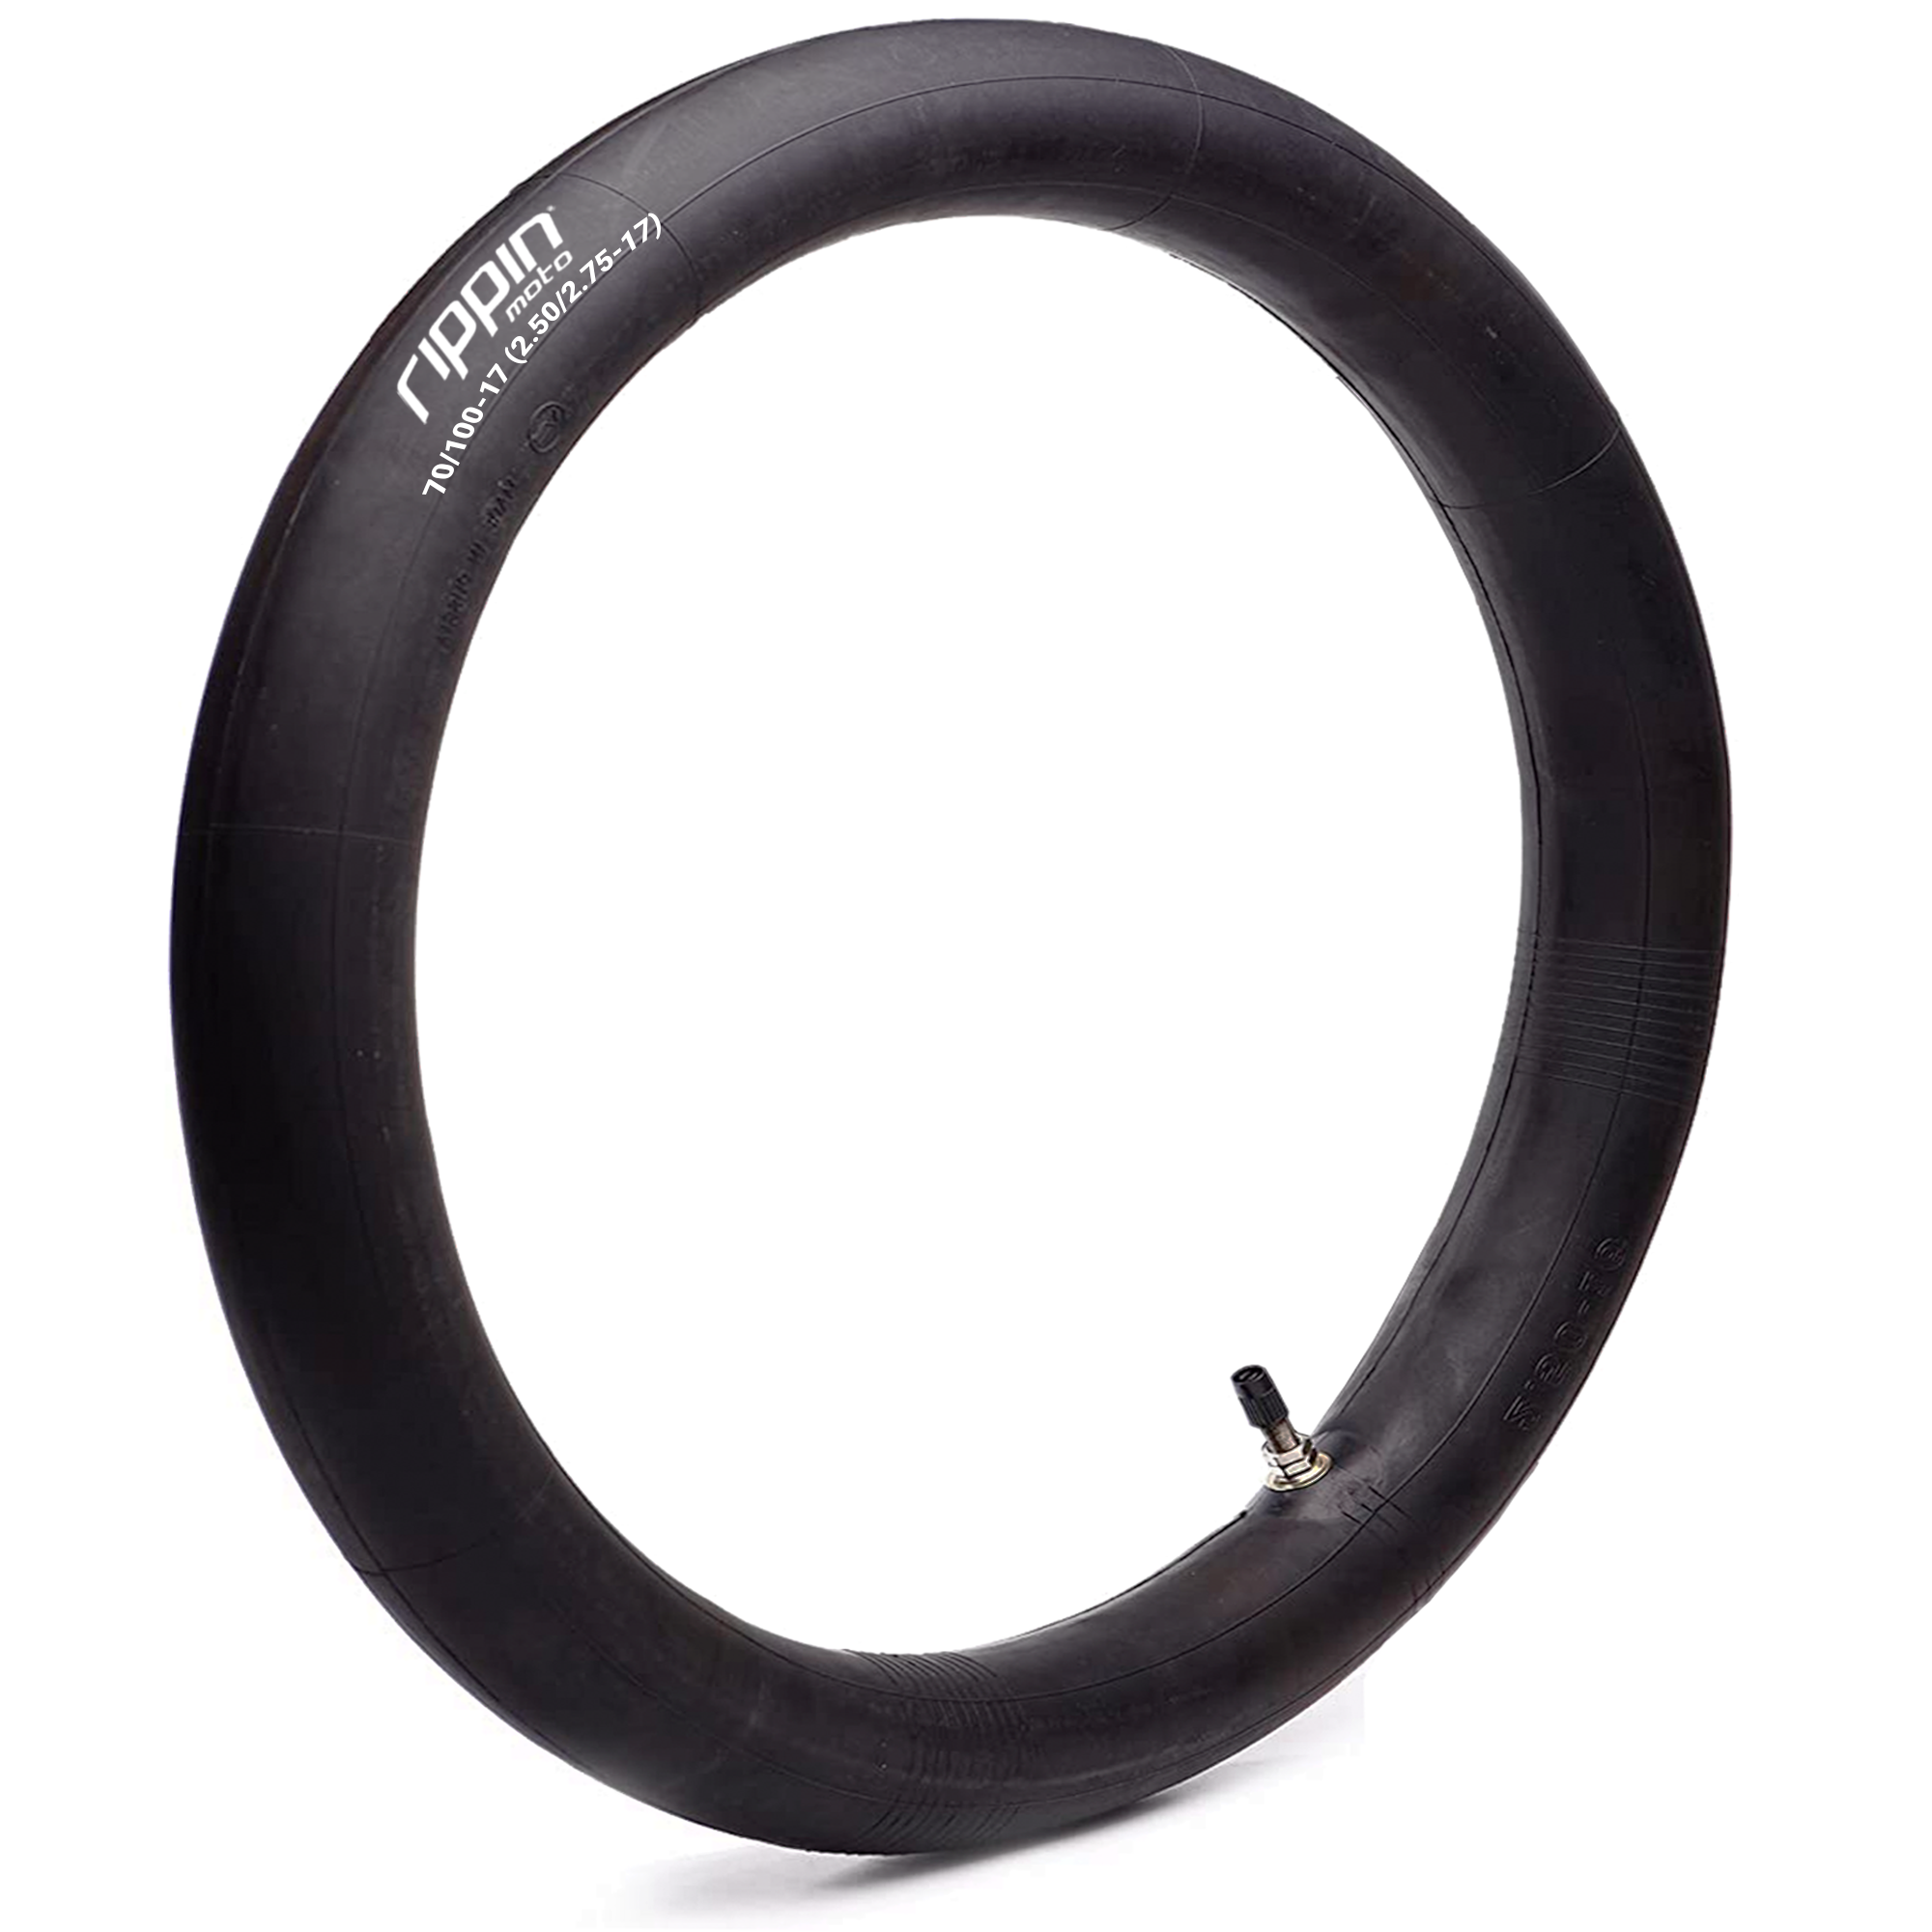 Rippin Moto 70/100-17 (2.50/2.75-17) Heavy Duty 17" Inner Tube 3mm Thick